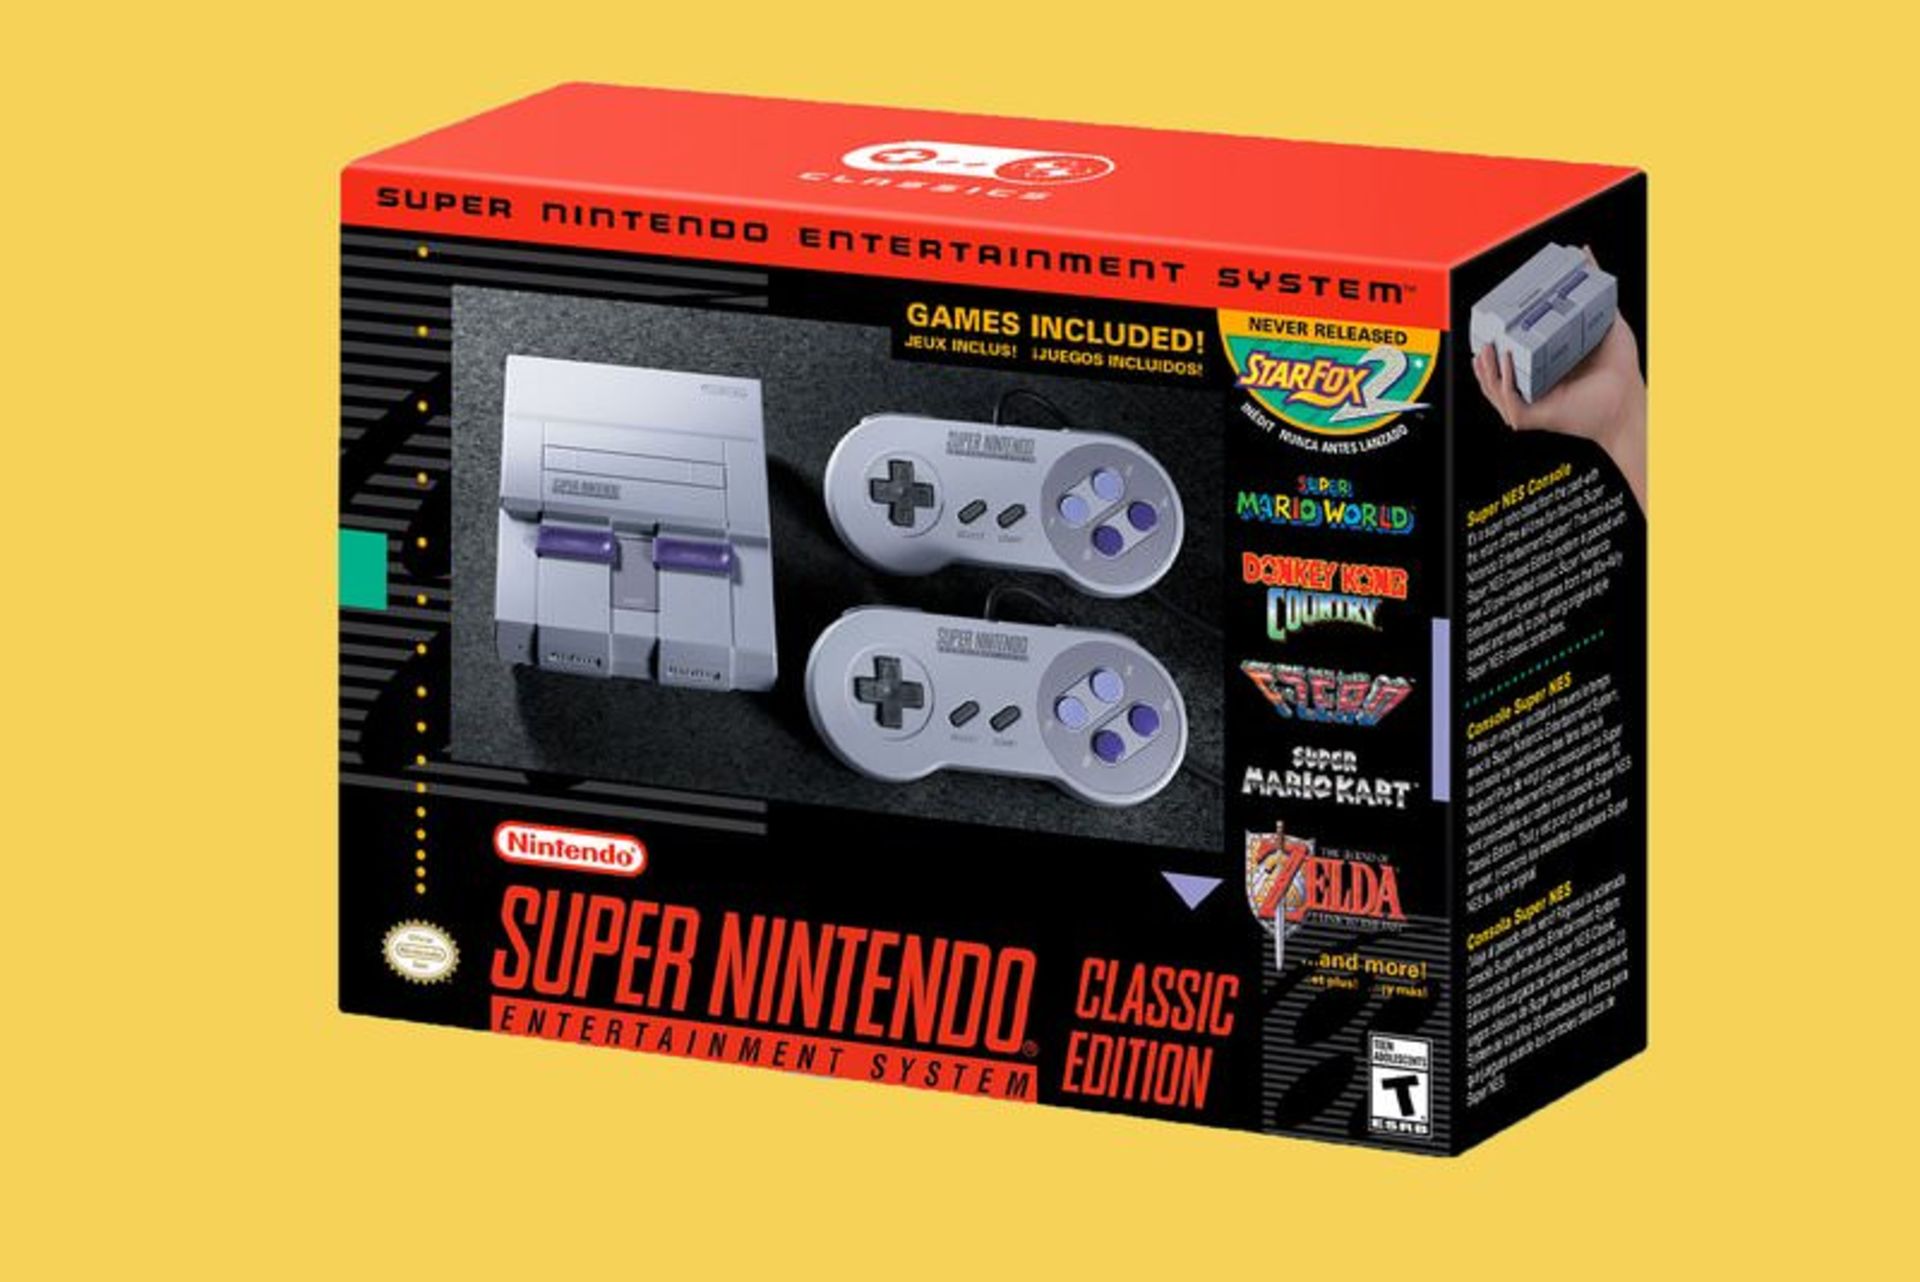 Super Nintendo Entertainment System (SNES) Classic